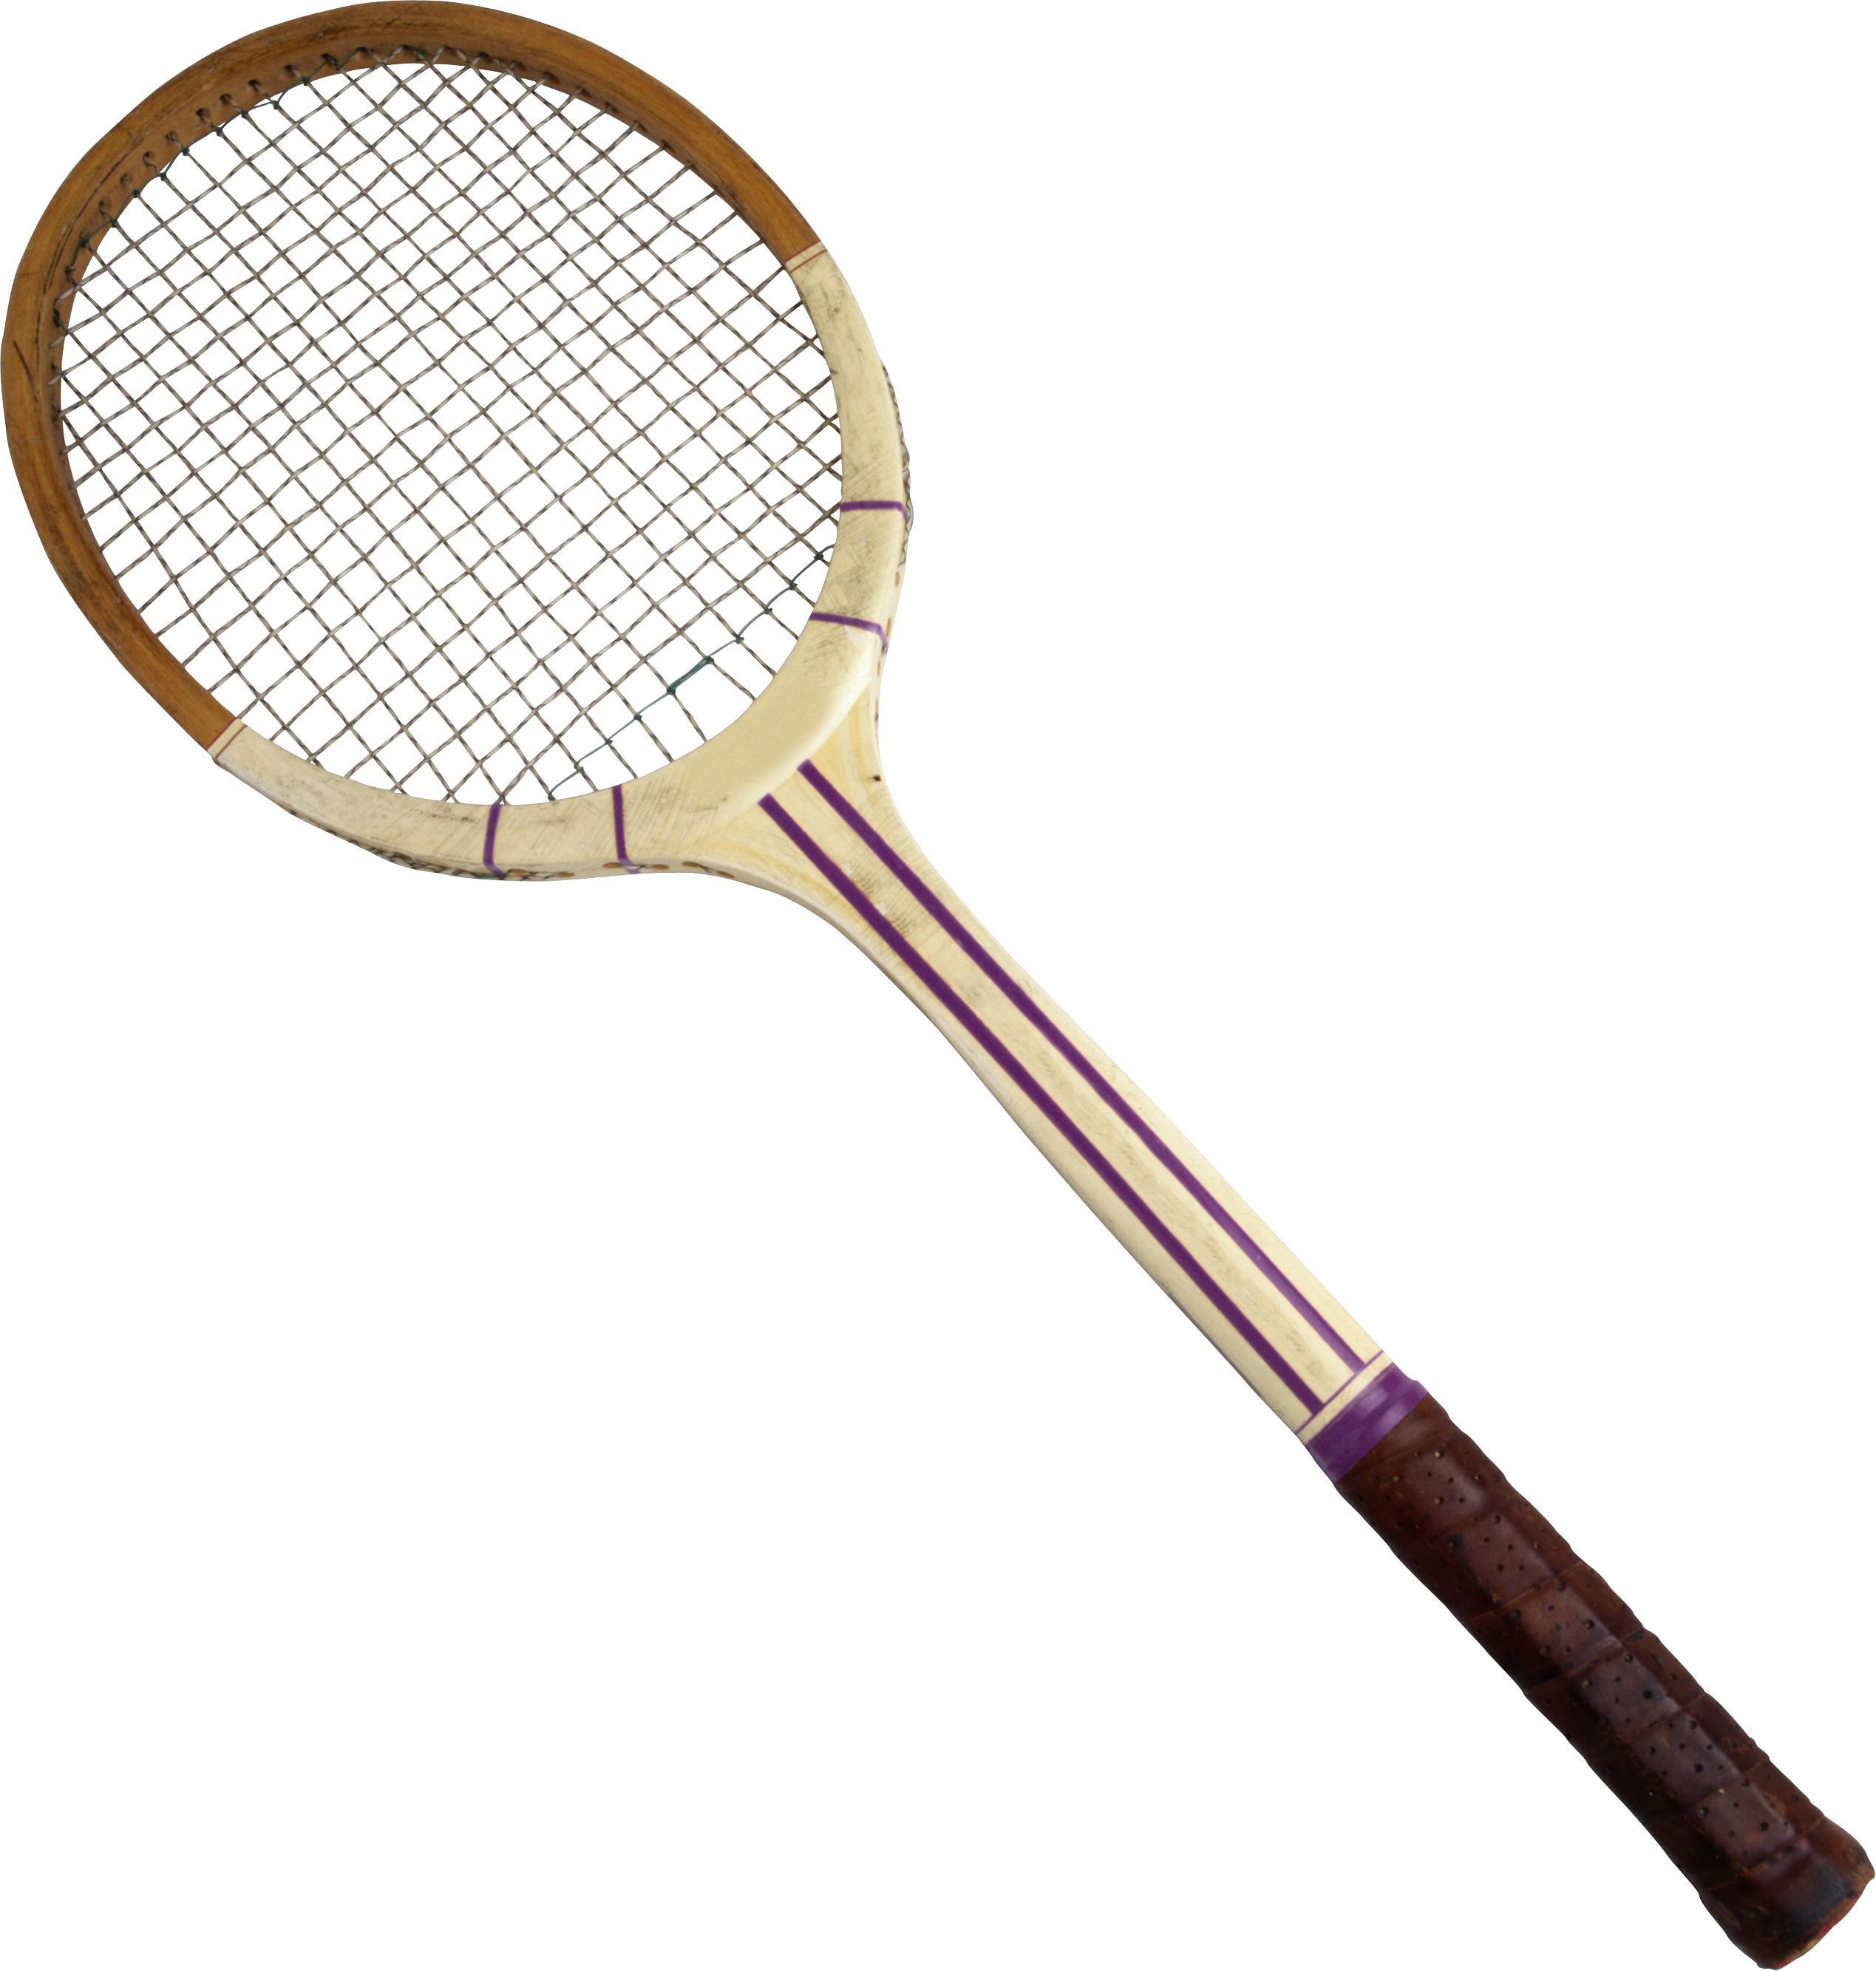 clipart sports racket sport